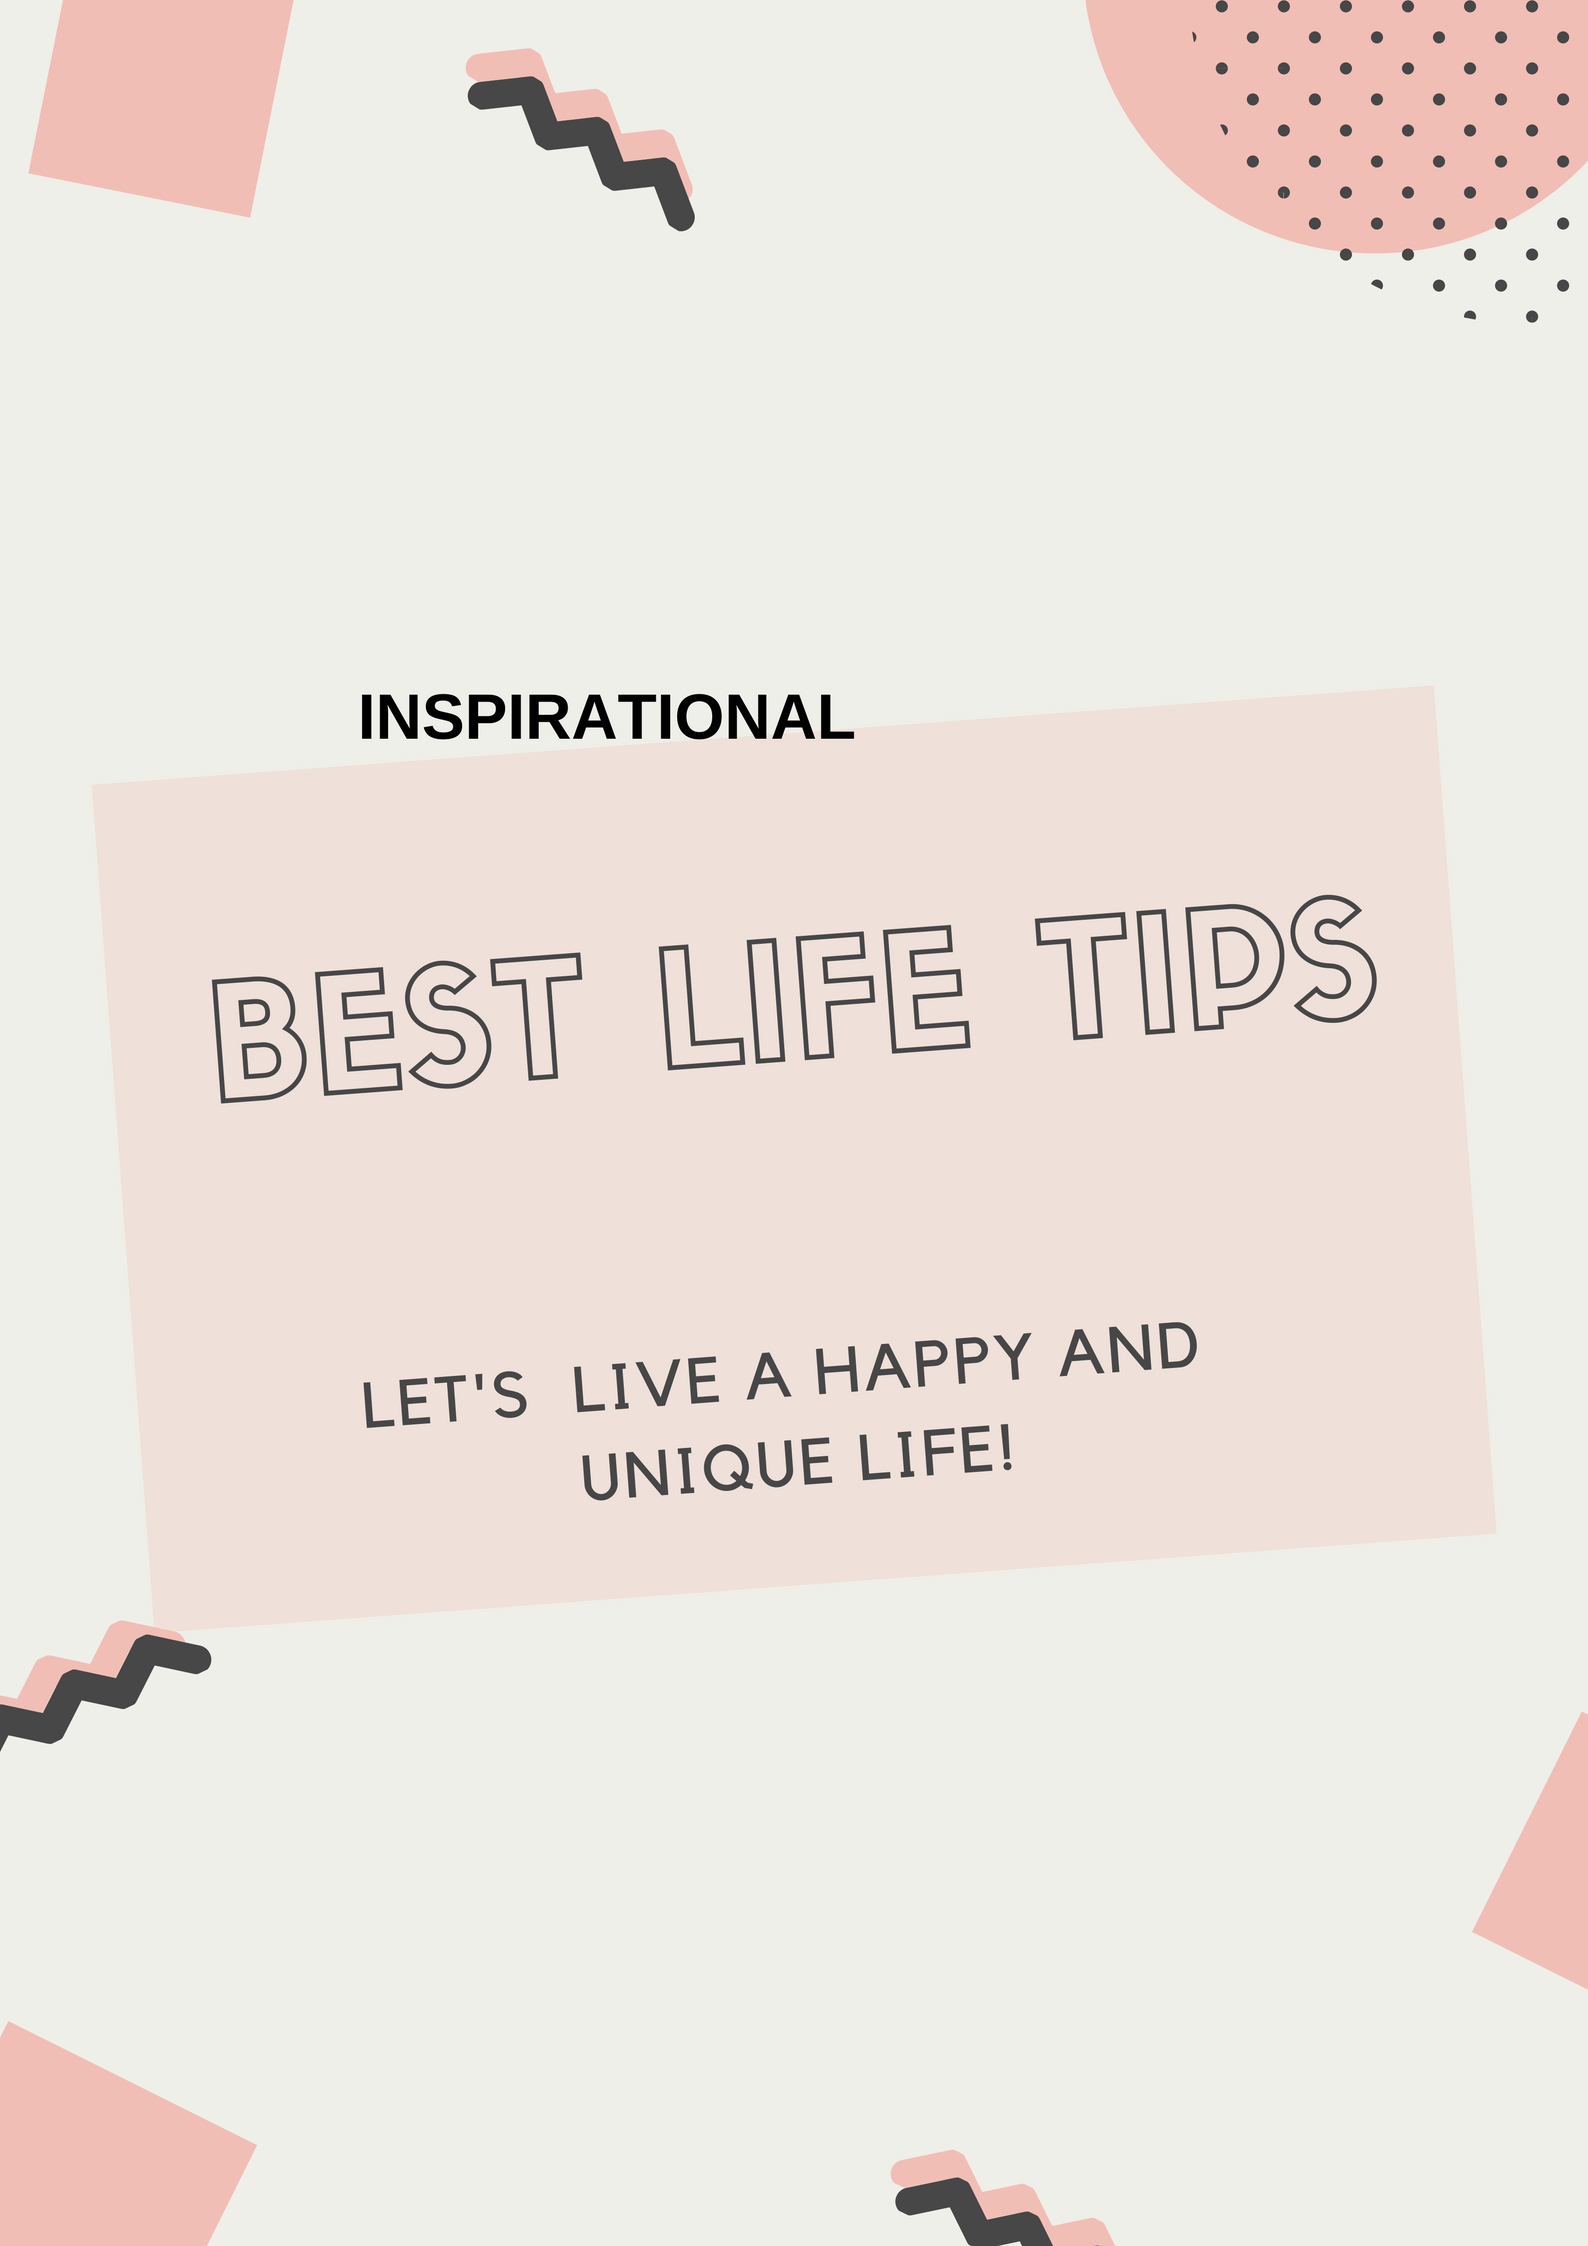 BEST LIFE TIPS1 - Inspirational Life Tips